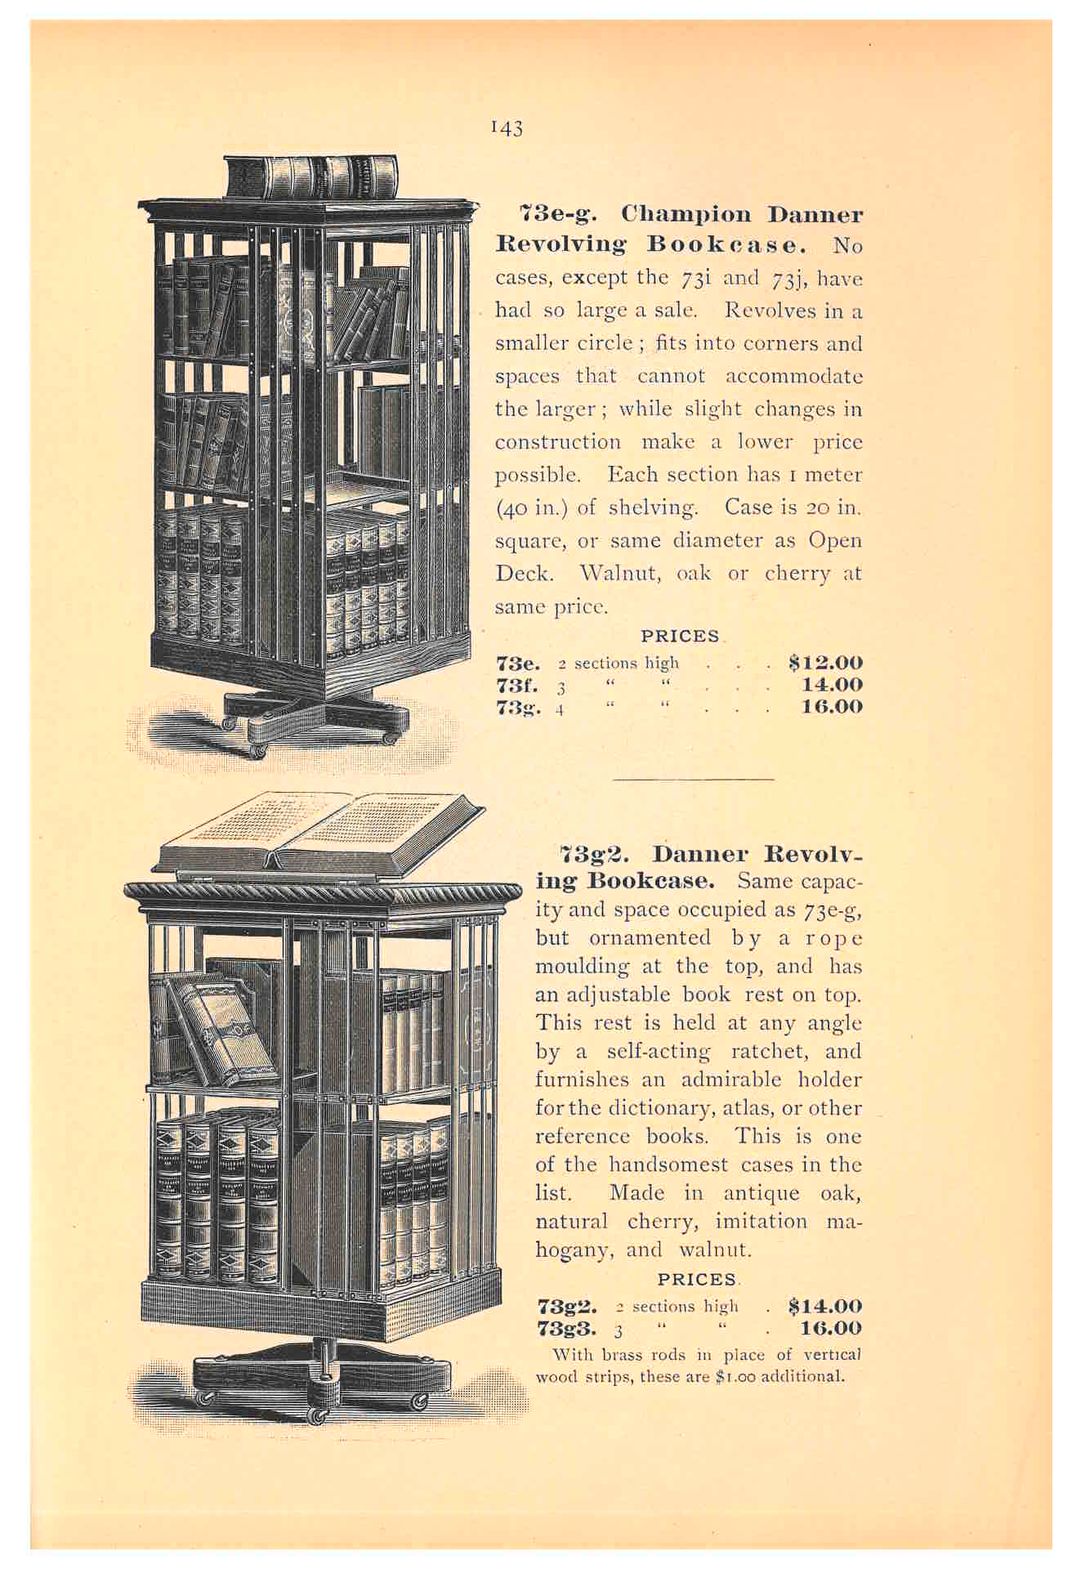 Trade catalog illustration of two revolving bookcases.